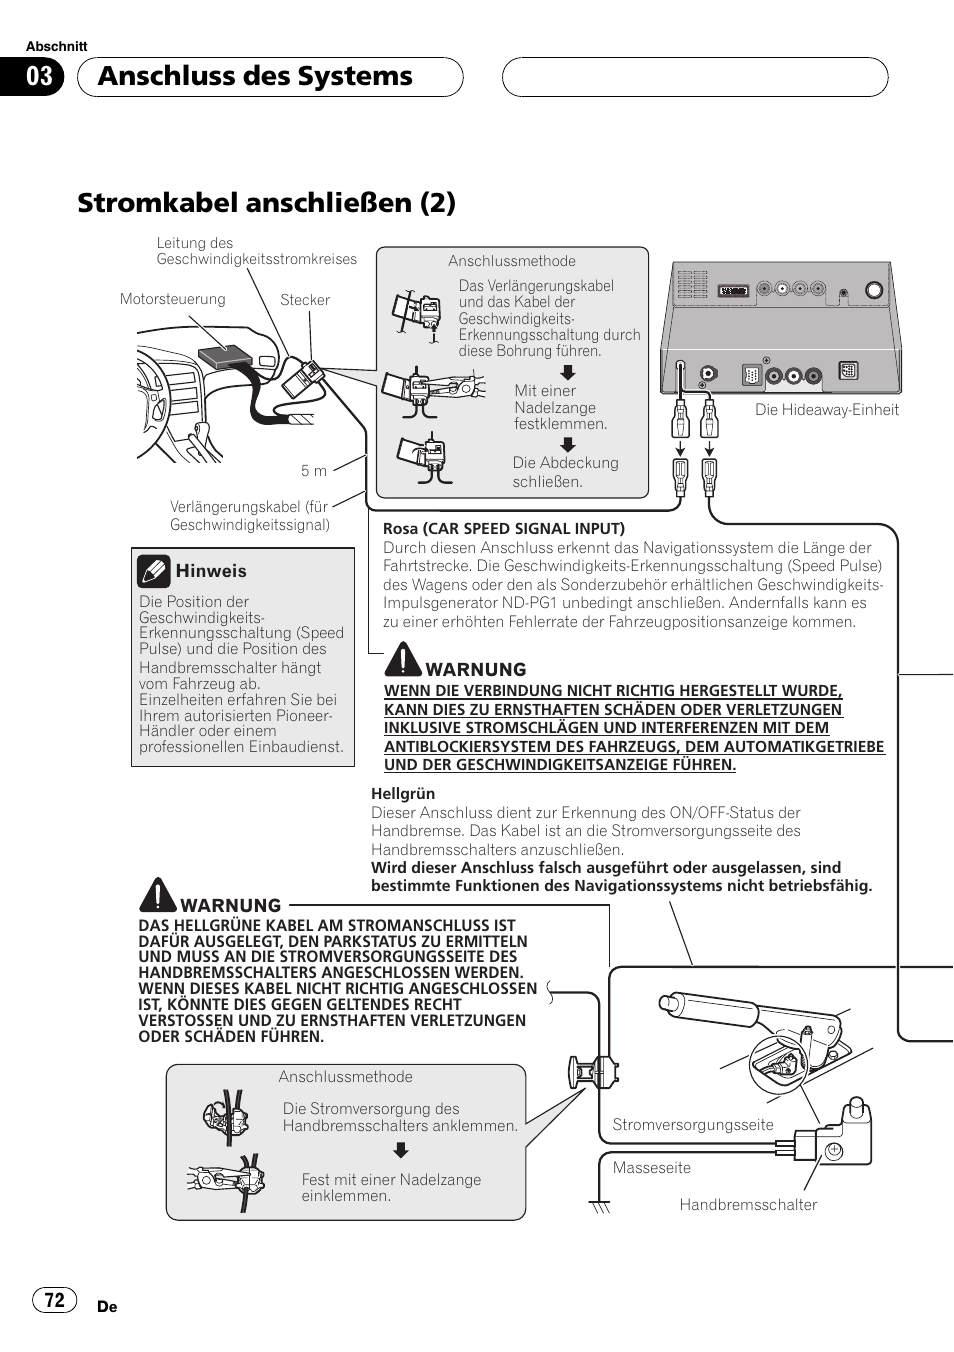 Stromkabel anschließen (2), Anschluss des systems | Pioneer AVIC-X3 User  Manual | Page 72 / 182 | Original mode